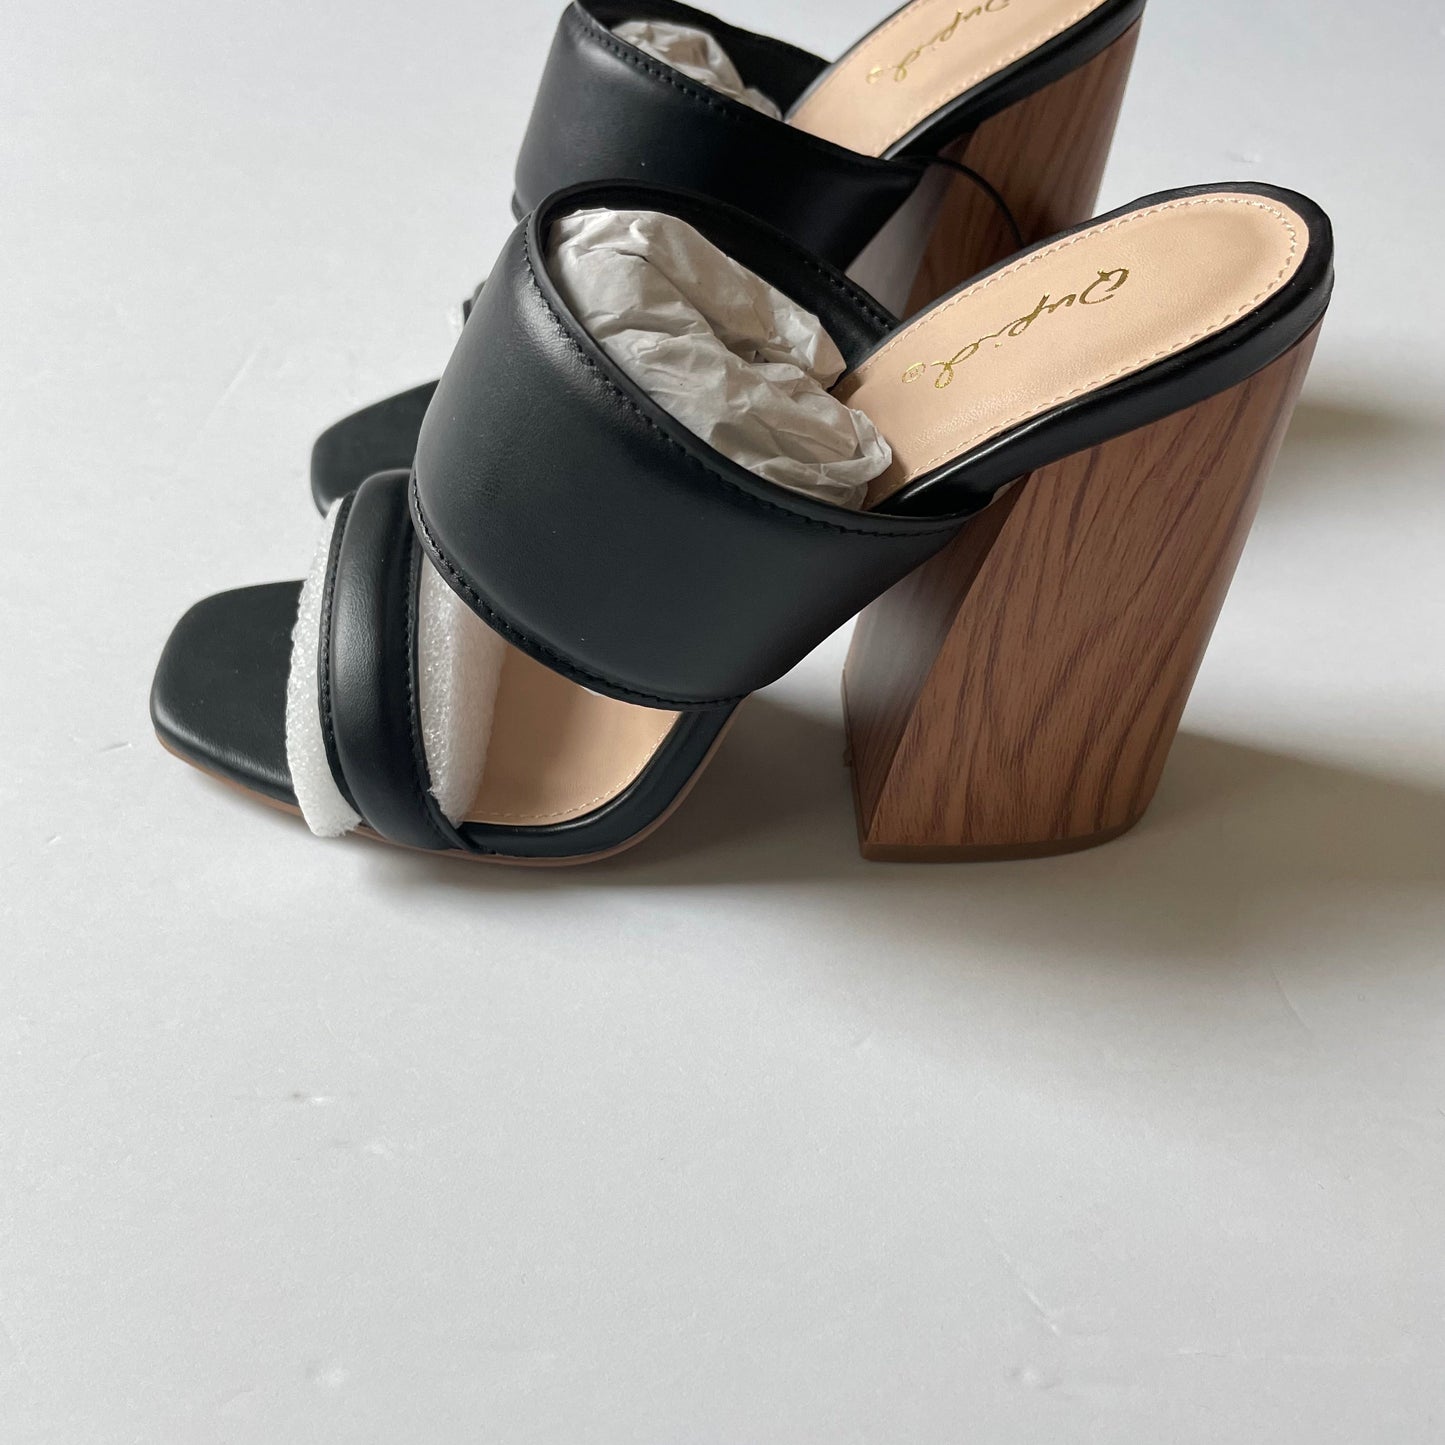 Black Shoes Heels Block Qupid, Size 7.5